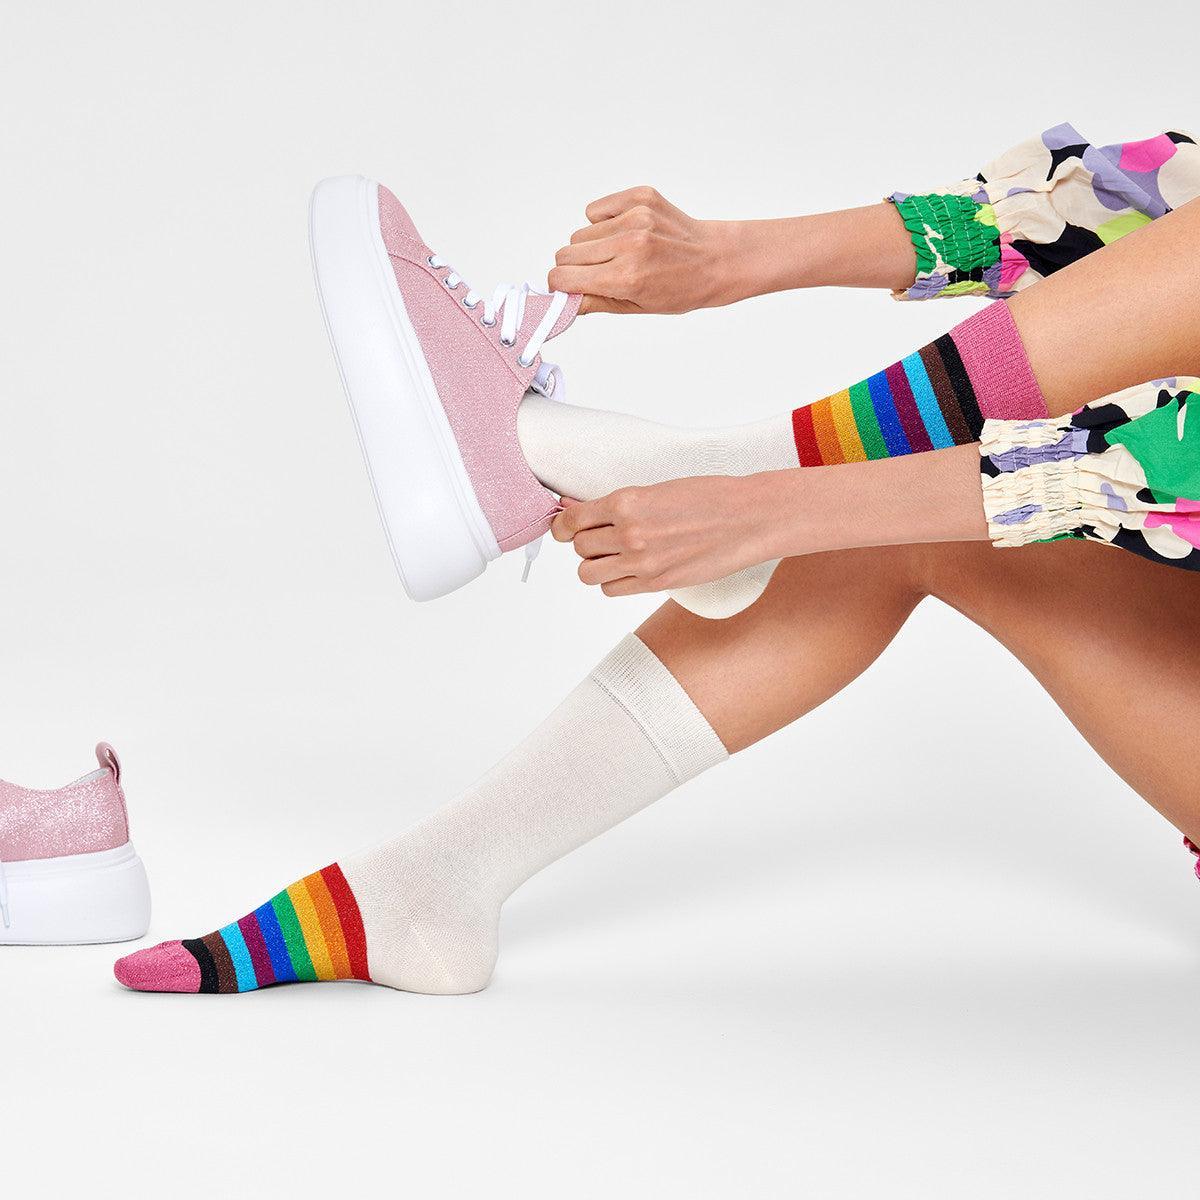 Pride Socks - Rainbow Glitter - Humble & Grand Homestore